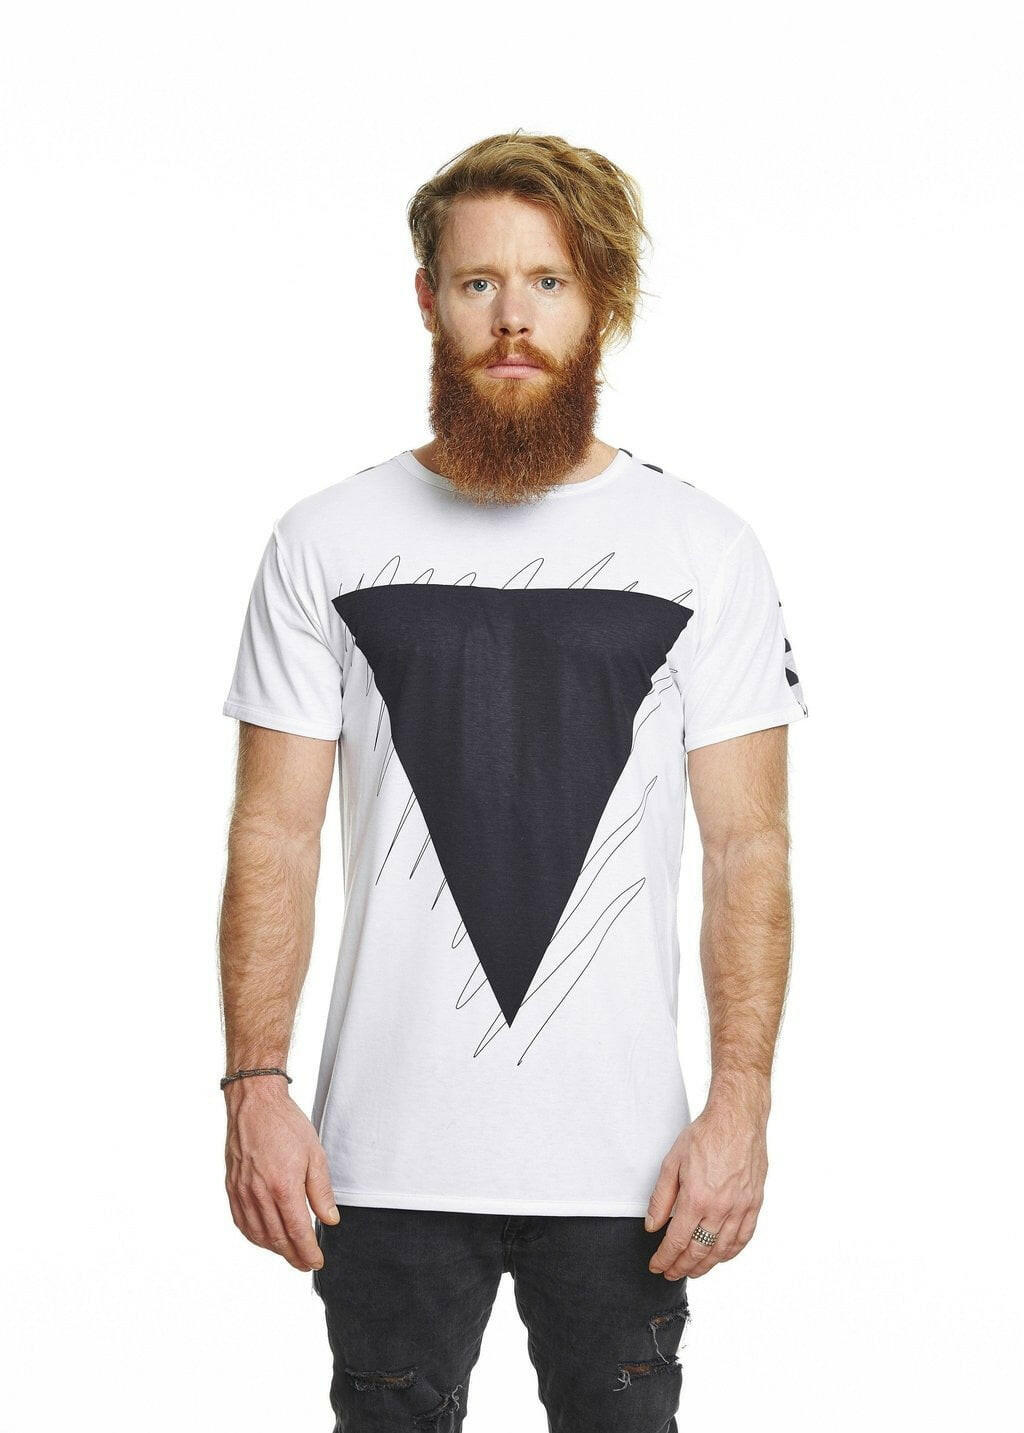 Lemme Know - Uztzu Clothing - Shop Super 4 in 1 T-shirts, Pants and hoodies online!